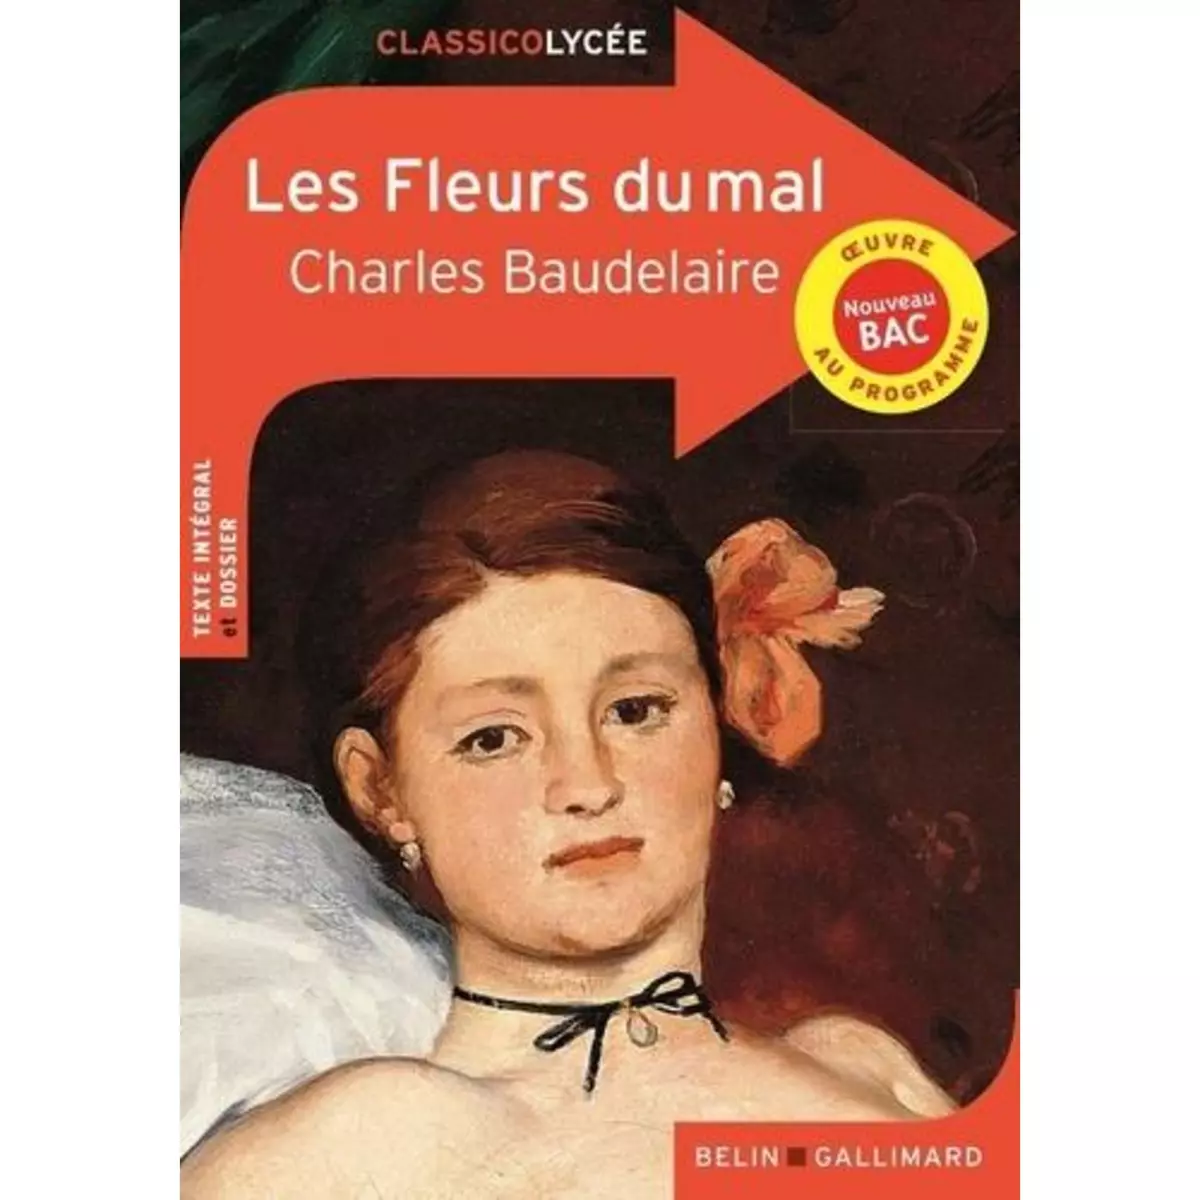  LES FLEURS DU MAL, Baudelaire Charles